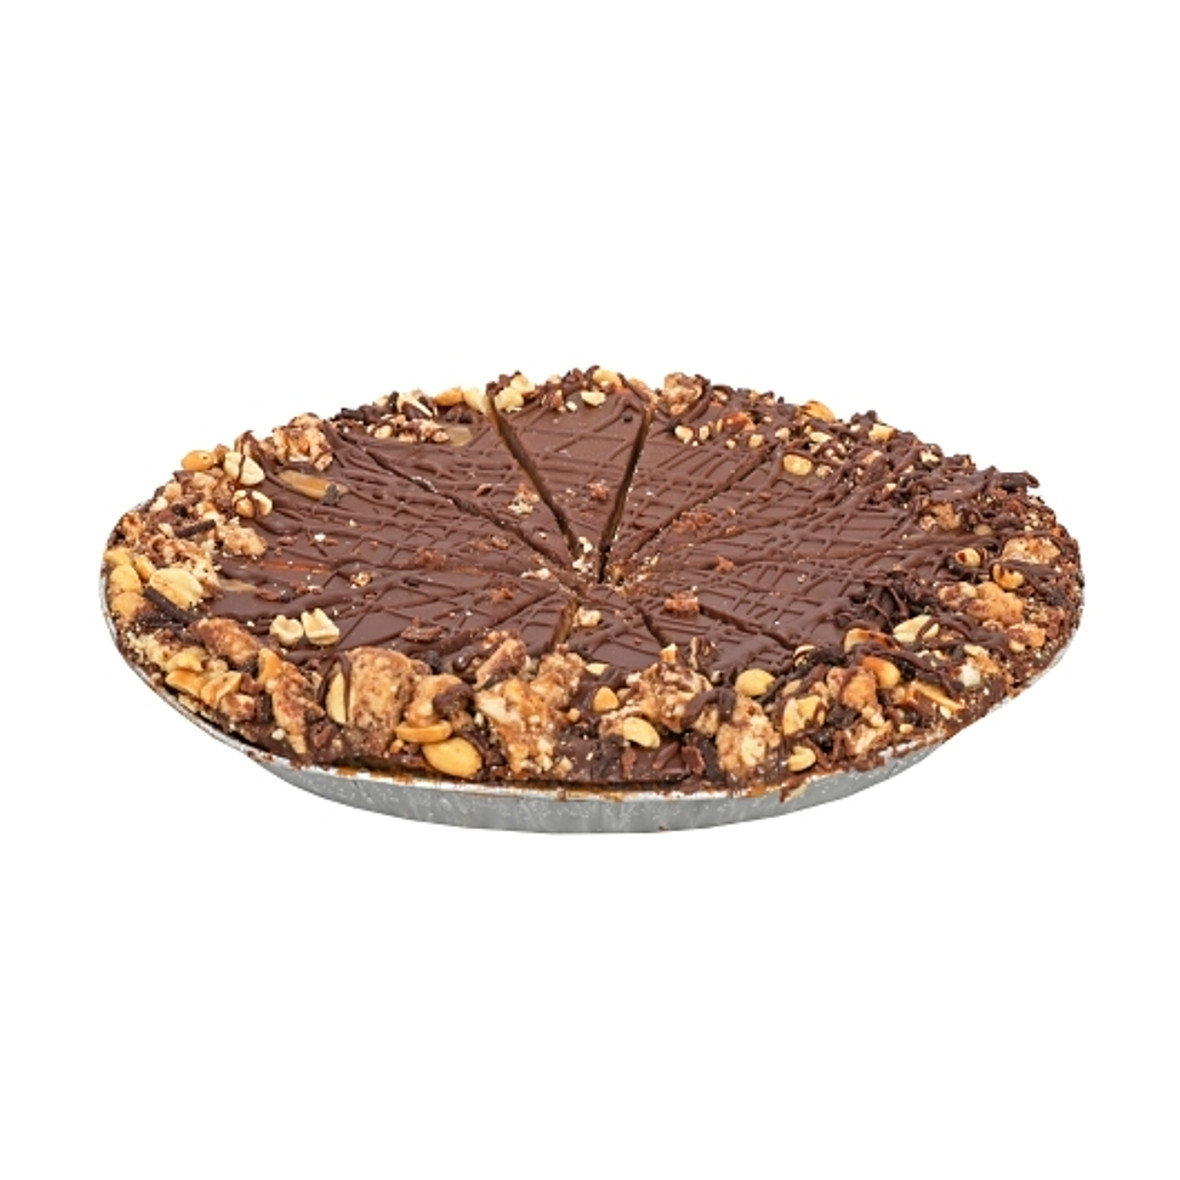 Sweet Street Non-Gmo Big Blitz Snickers Pie, 4.31 Pound, 4 Per Case